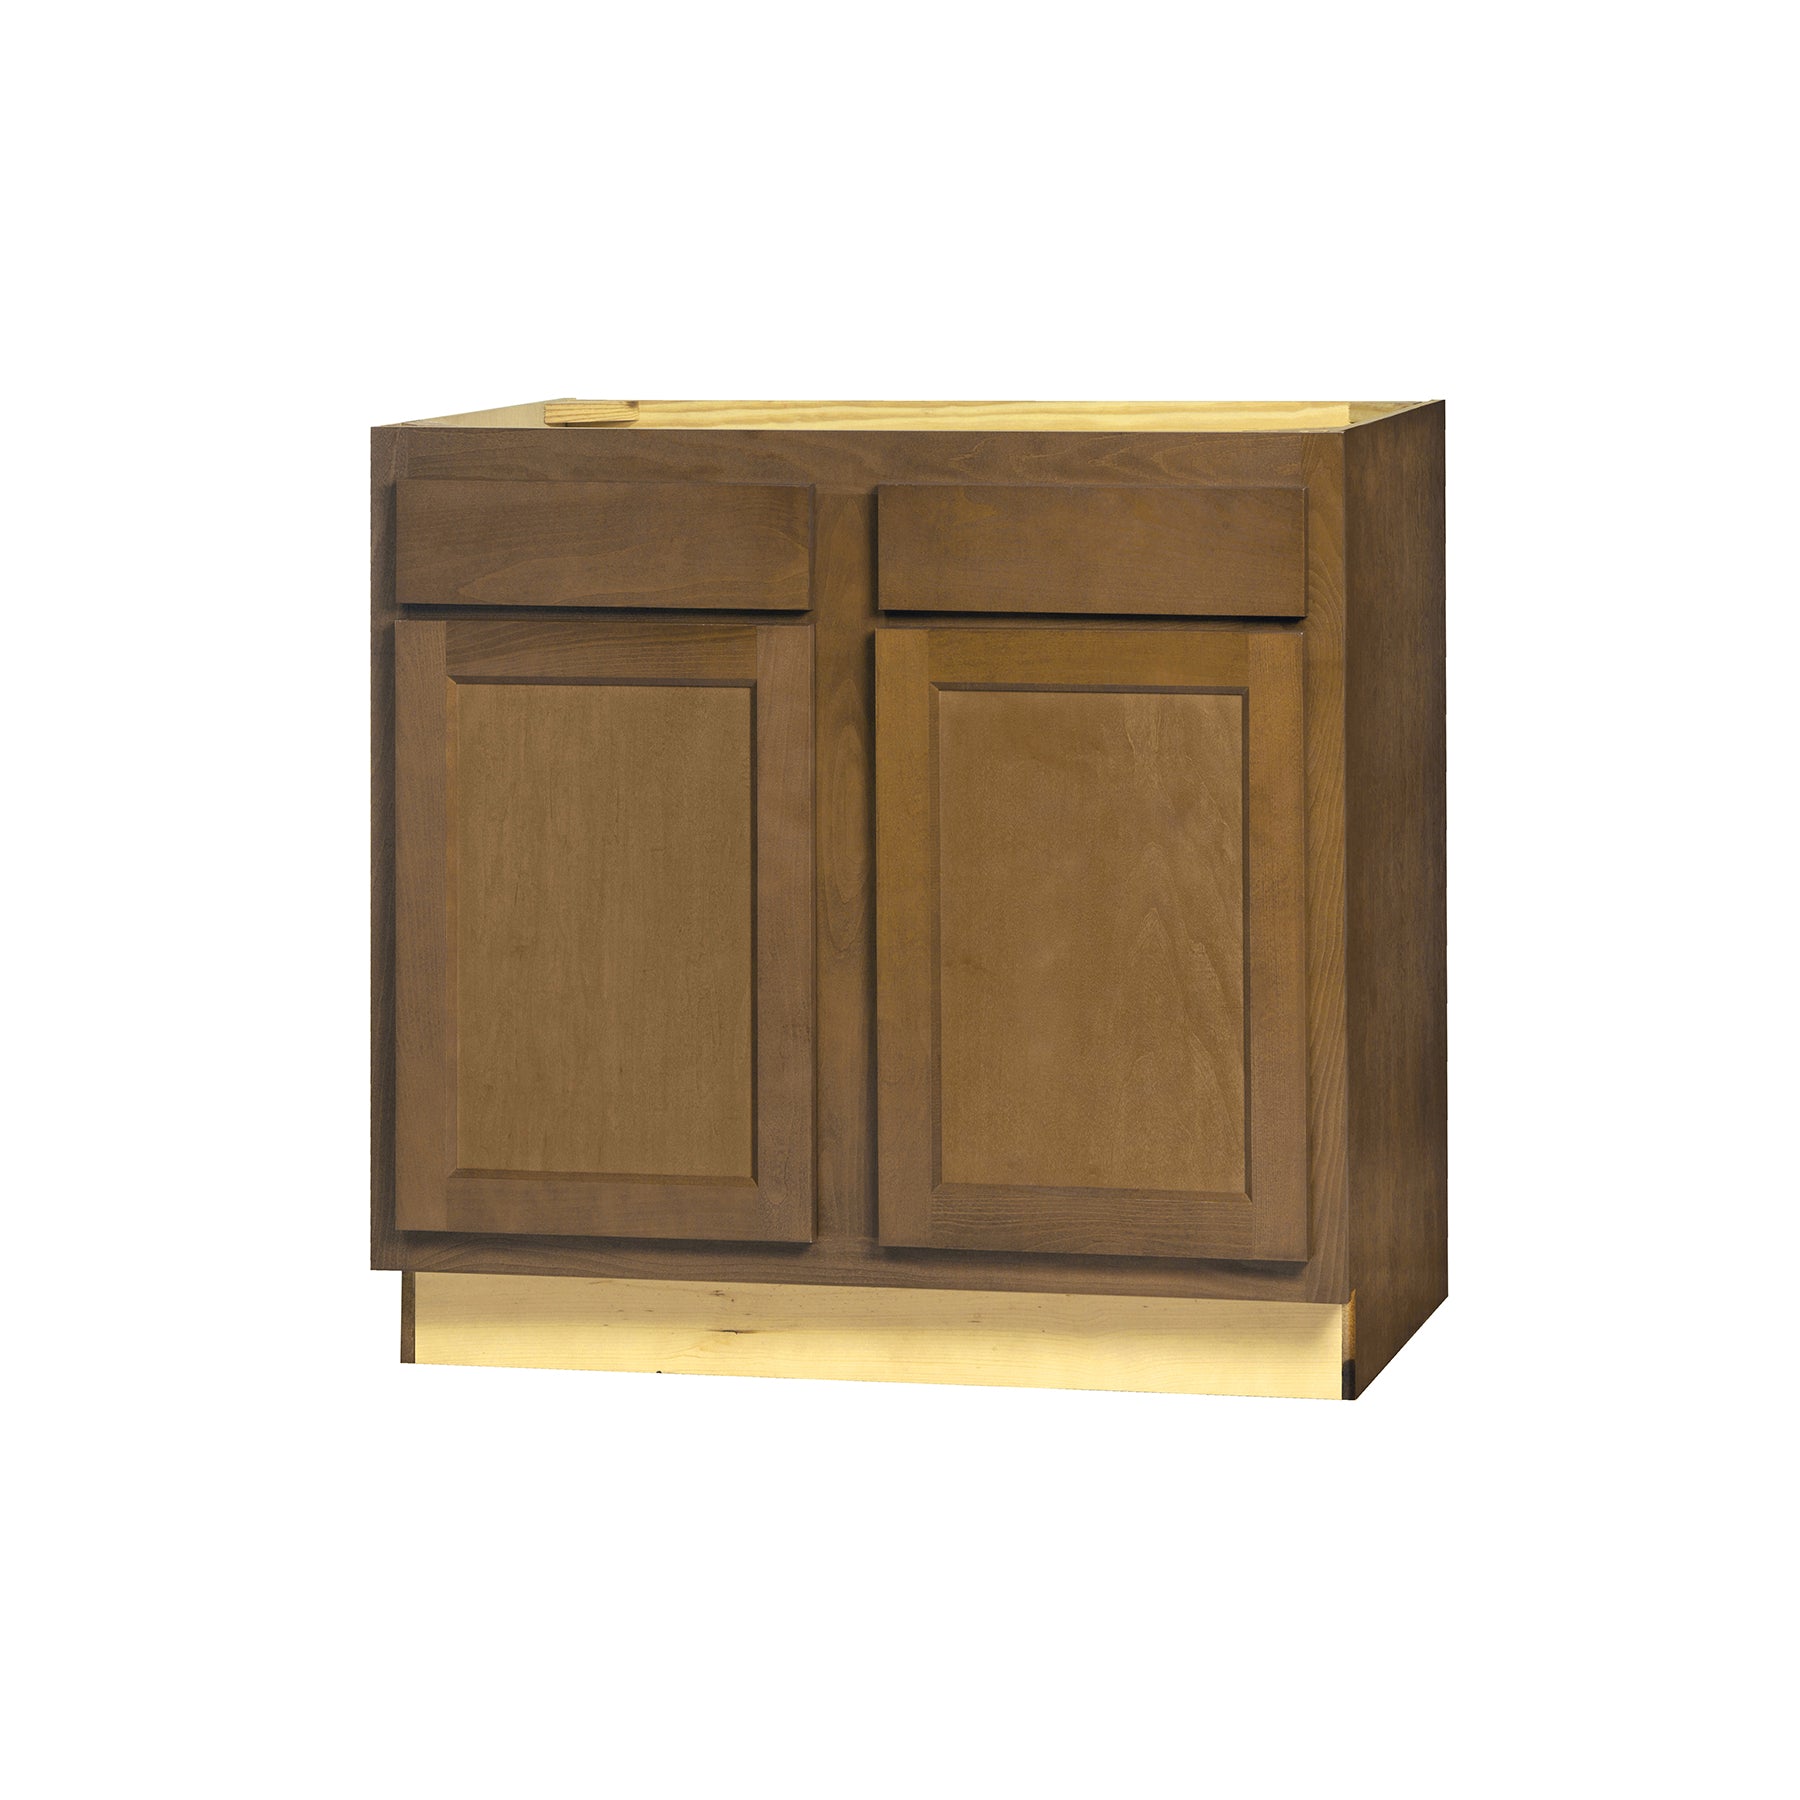 36 Inch Base Cabinets - Warmwood Shaker - 36 Inch W x 24 Inch D x 34.5 Inch H